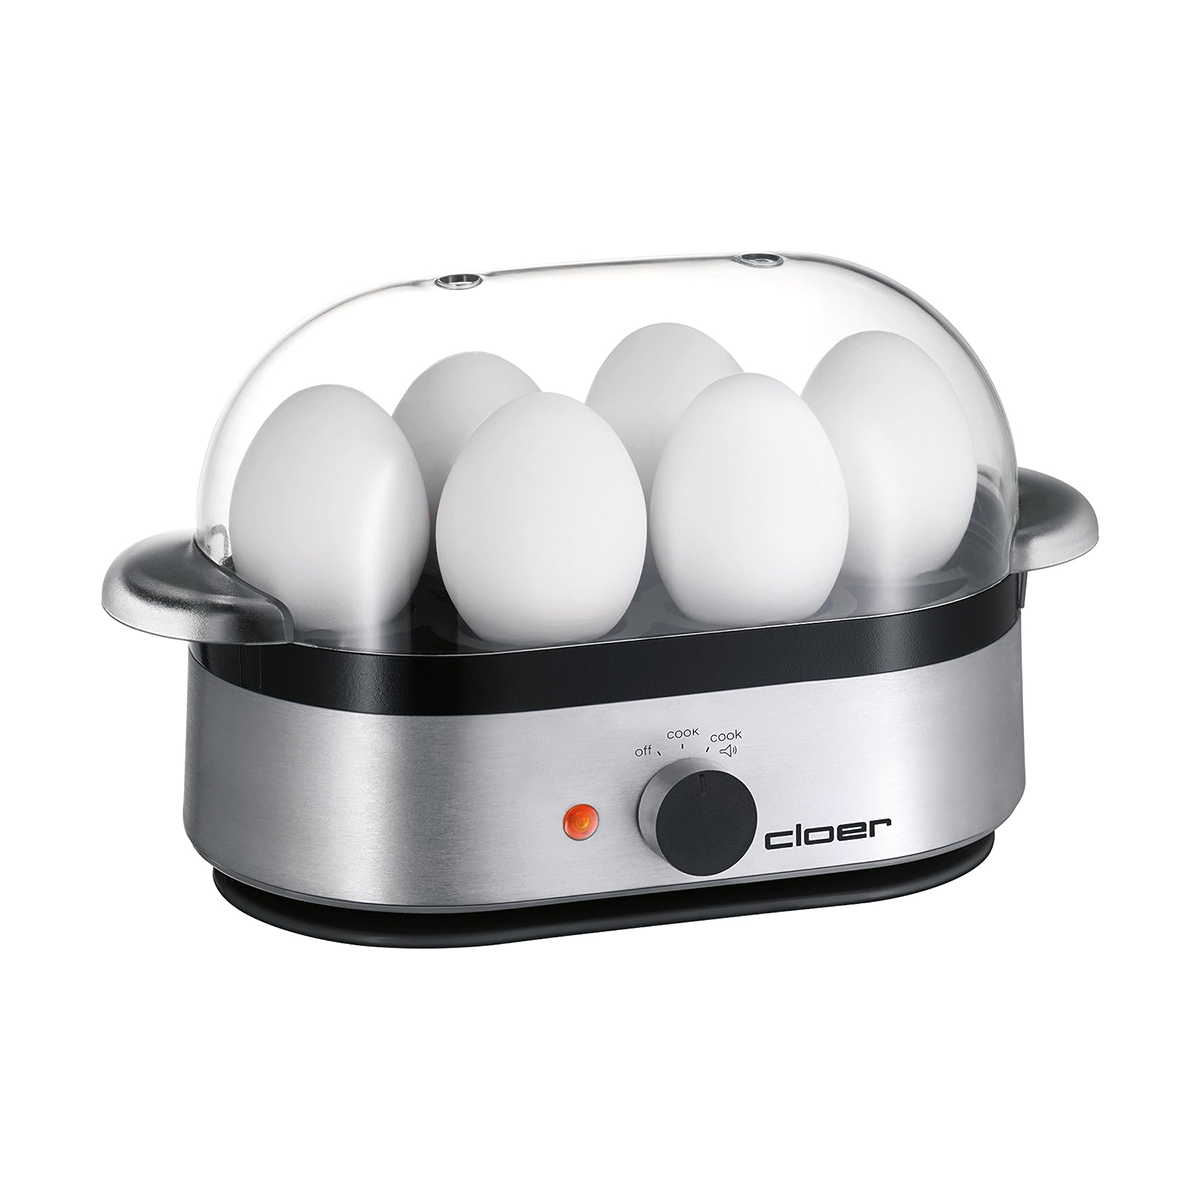 Cloer 6099 Eierkocher 400 W für 6 Eier